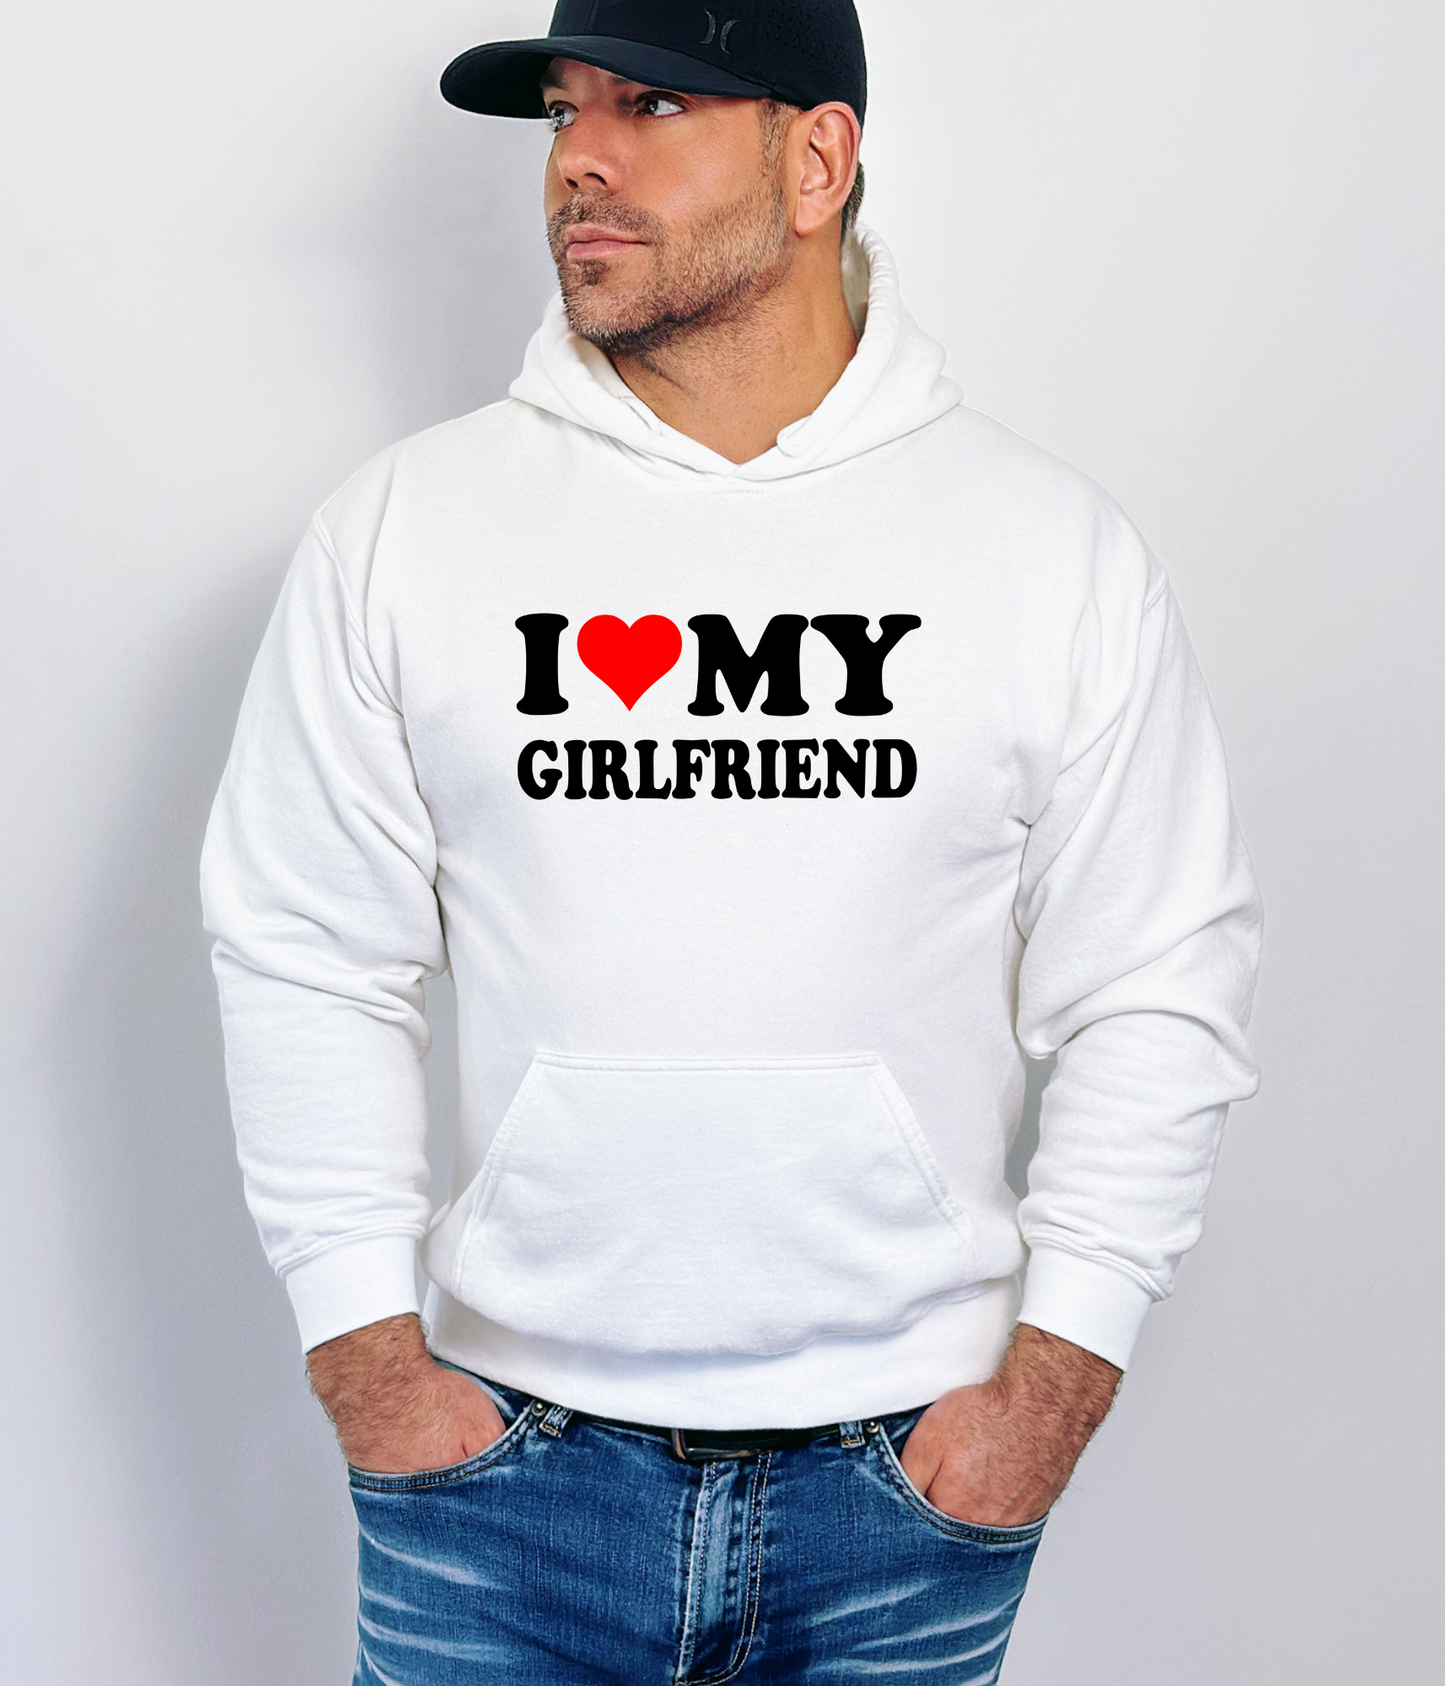 I Love My Girlfriend Shirt, I Love My Girlfriend Sweater, I Love My Girlfriend Sweatshirt, I Love My Girlfriend Hoodie, Satirical Shirt, Funny Tee, Boyfriend Gift